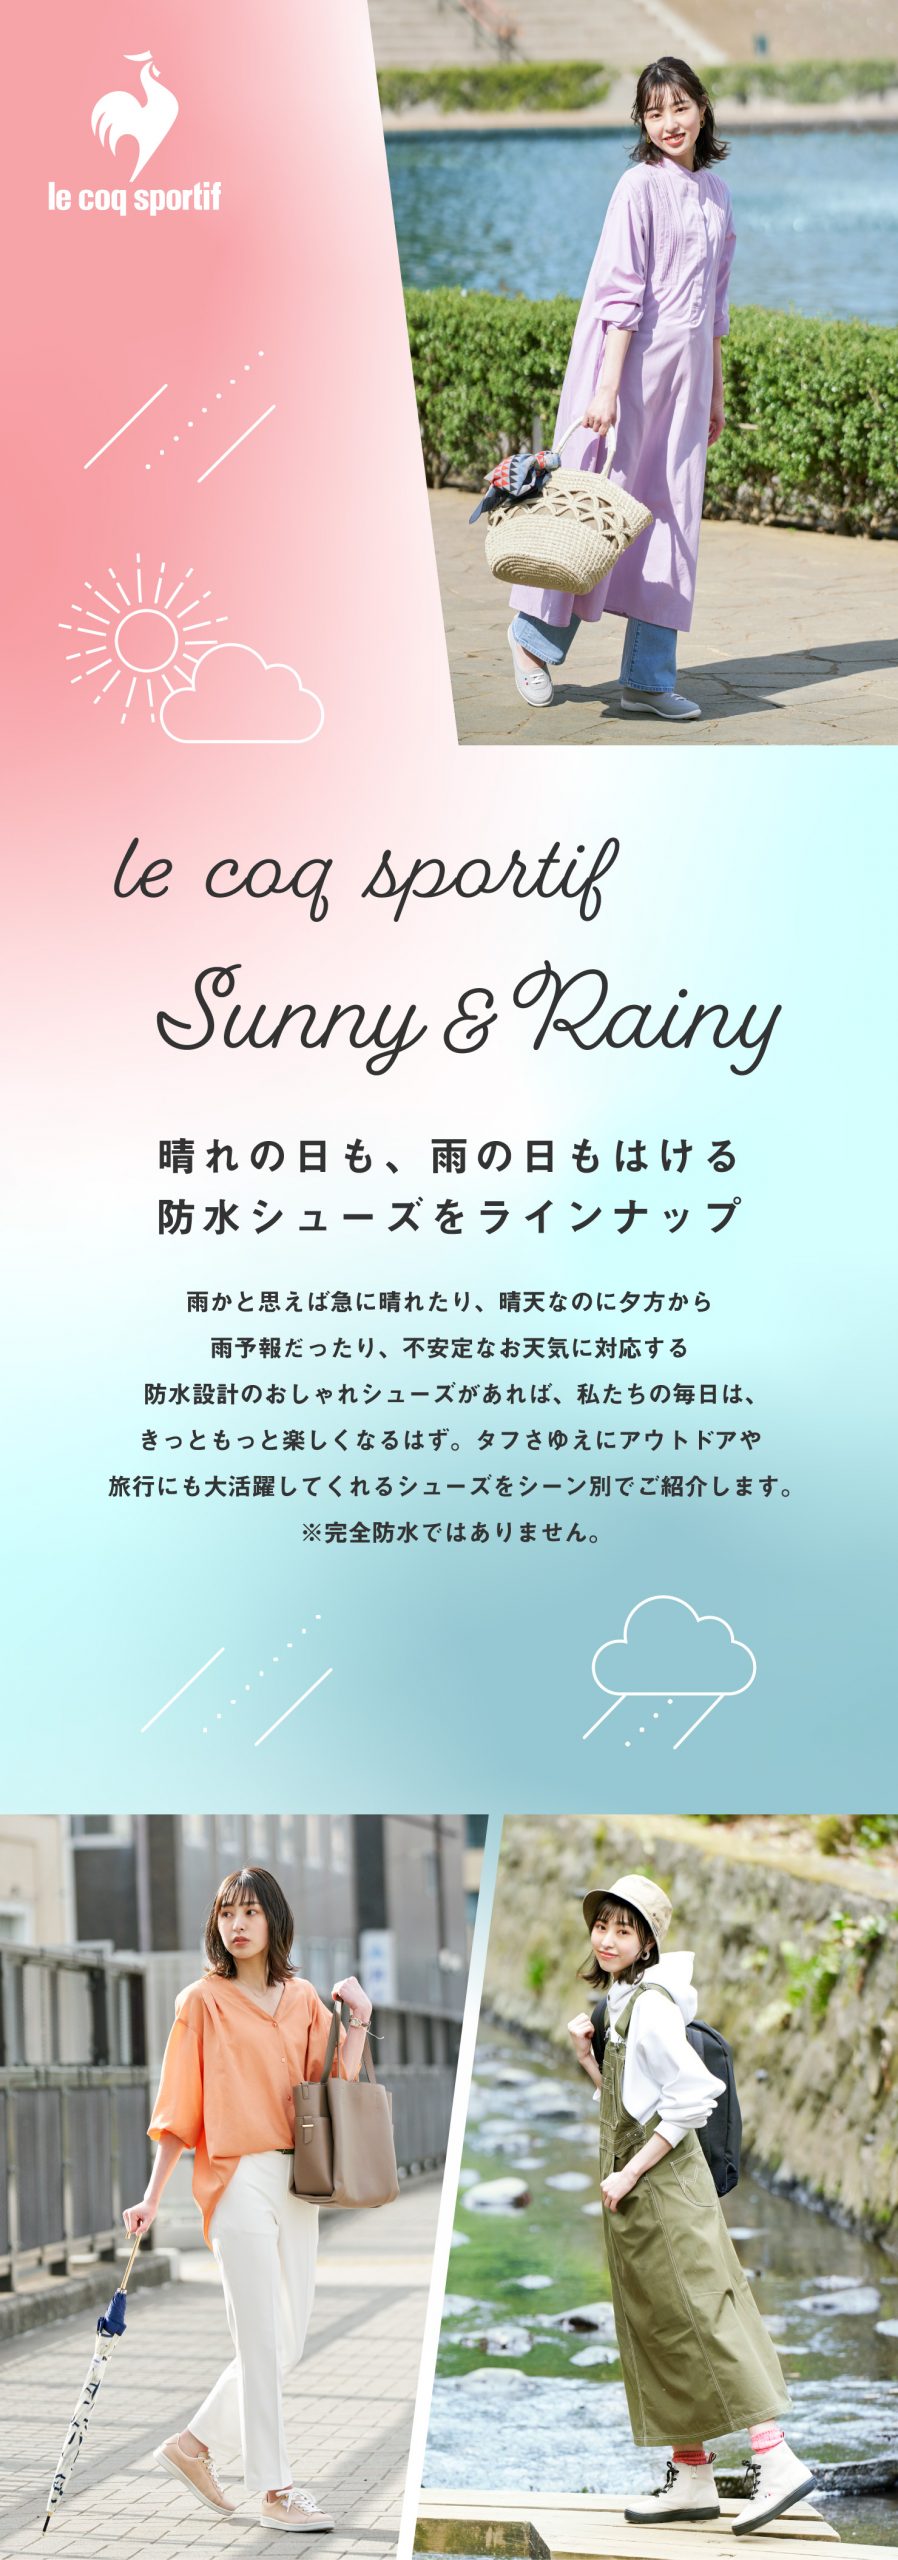 le coq sportif Sunny&Rainy